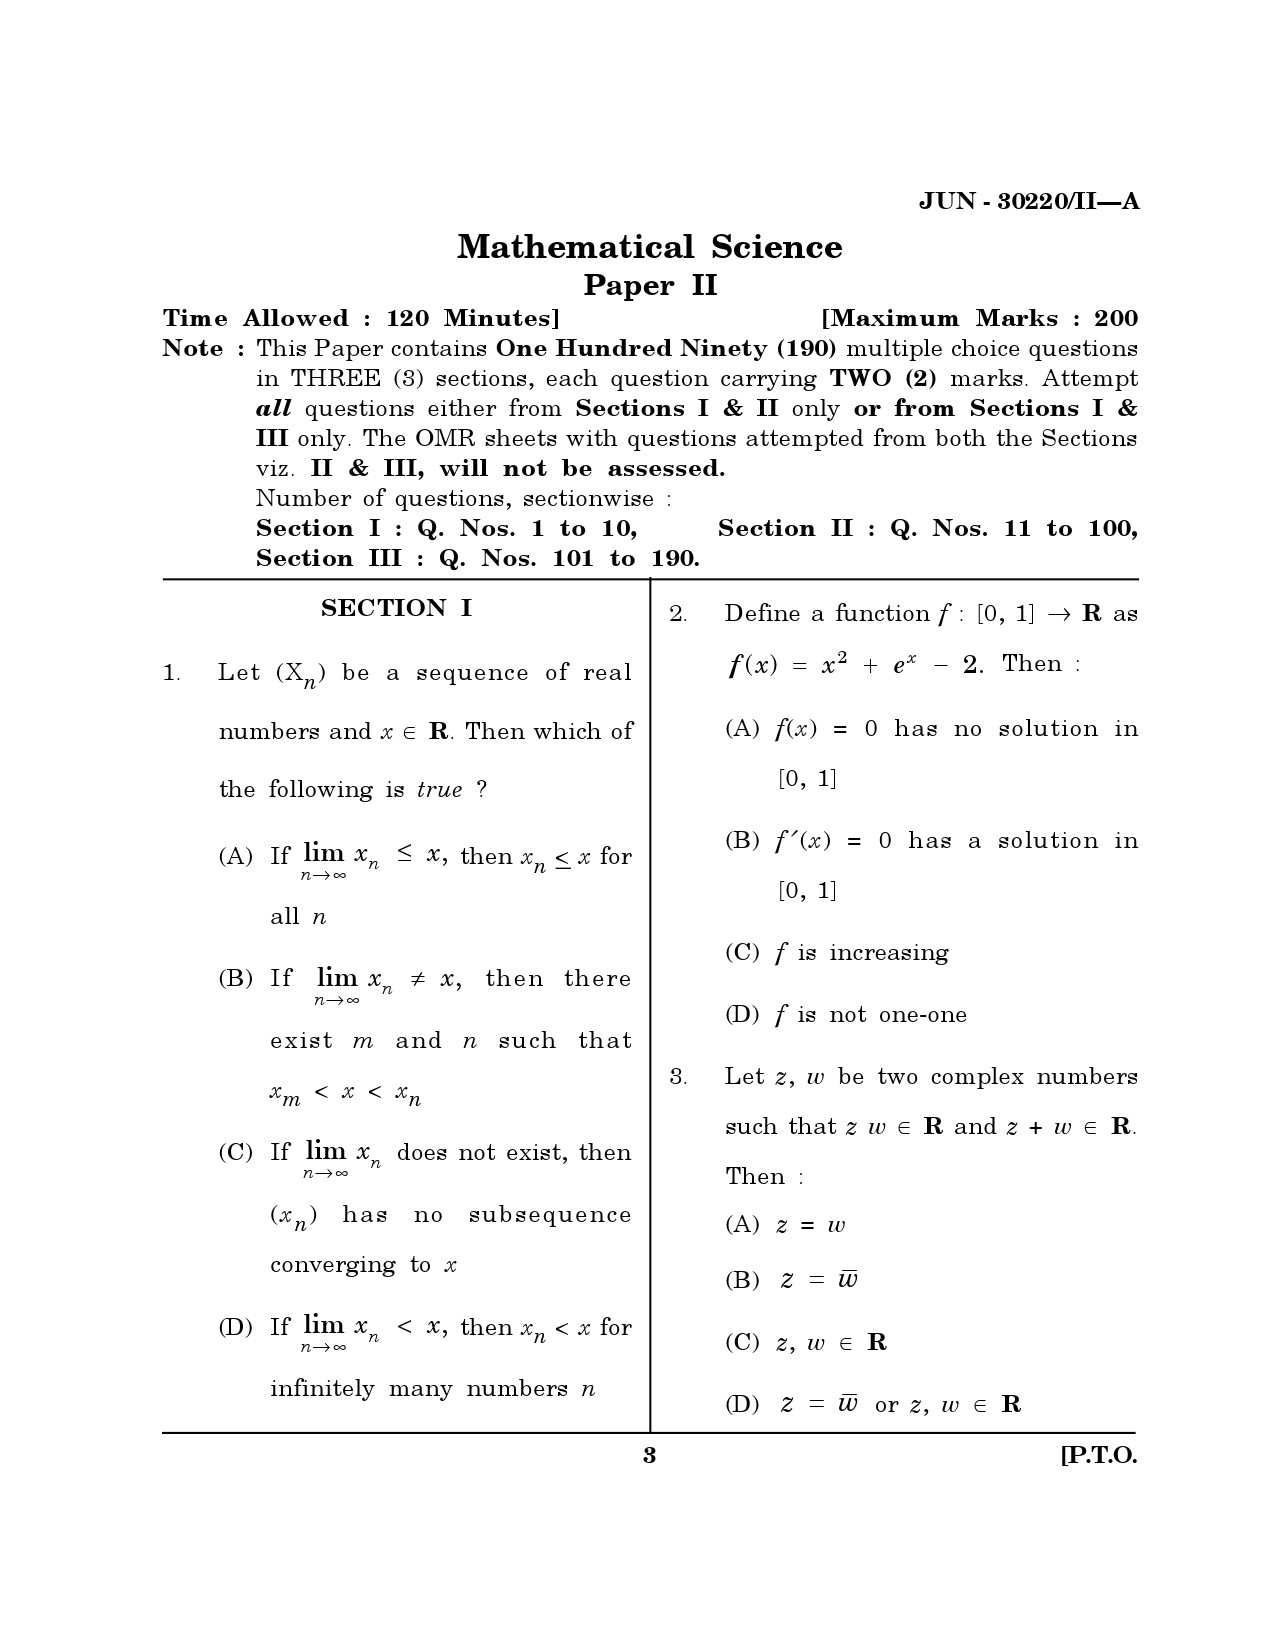 Maharashtra SET Mathematical Sciences Question Paper II June 2020 2